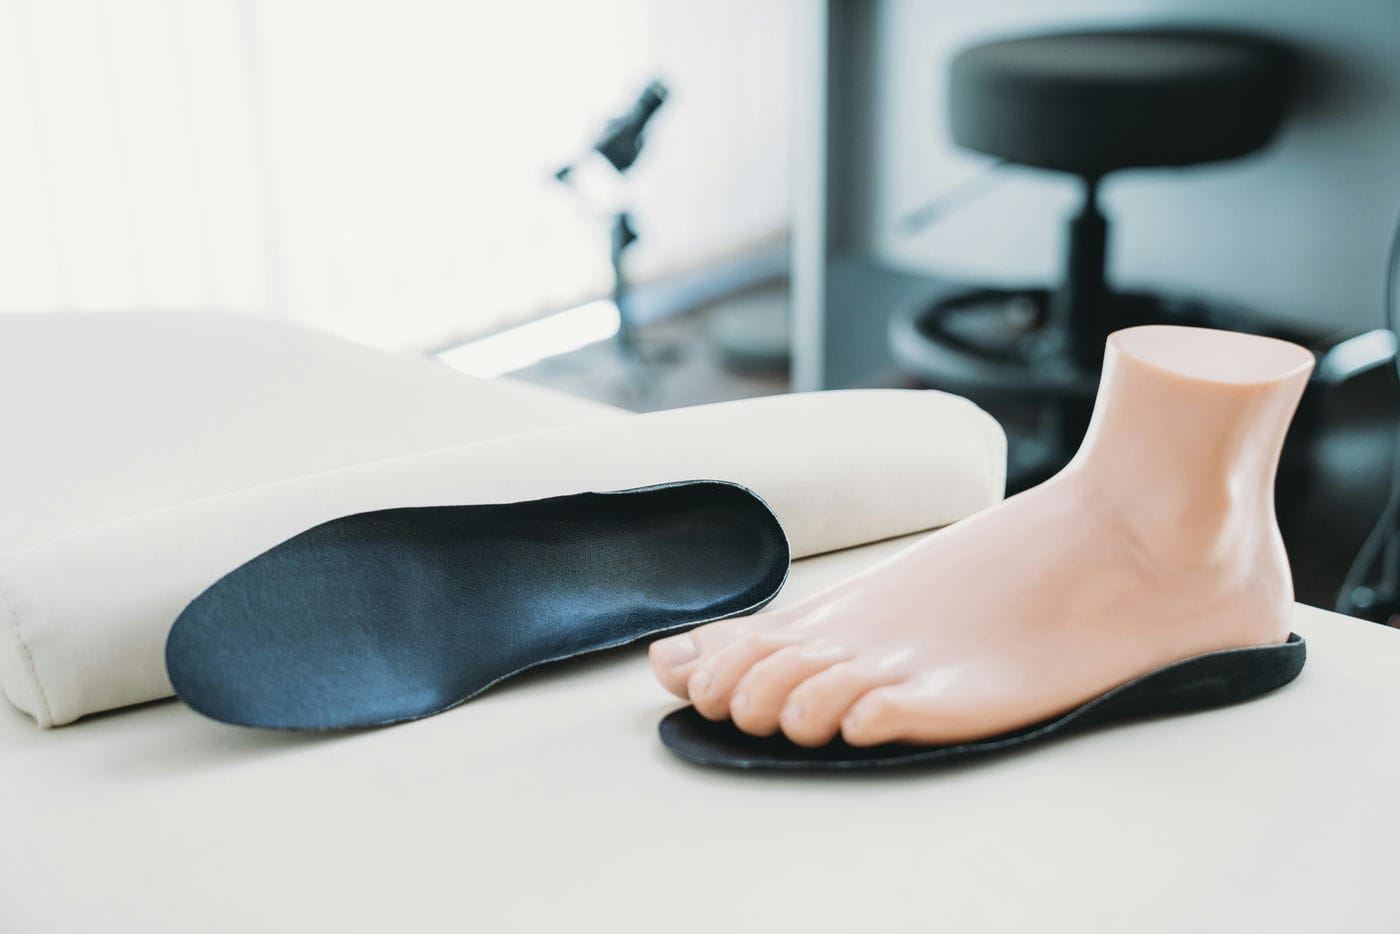 custom foot orthotics in clinic